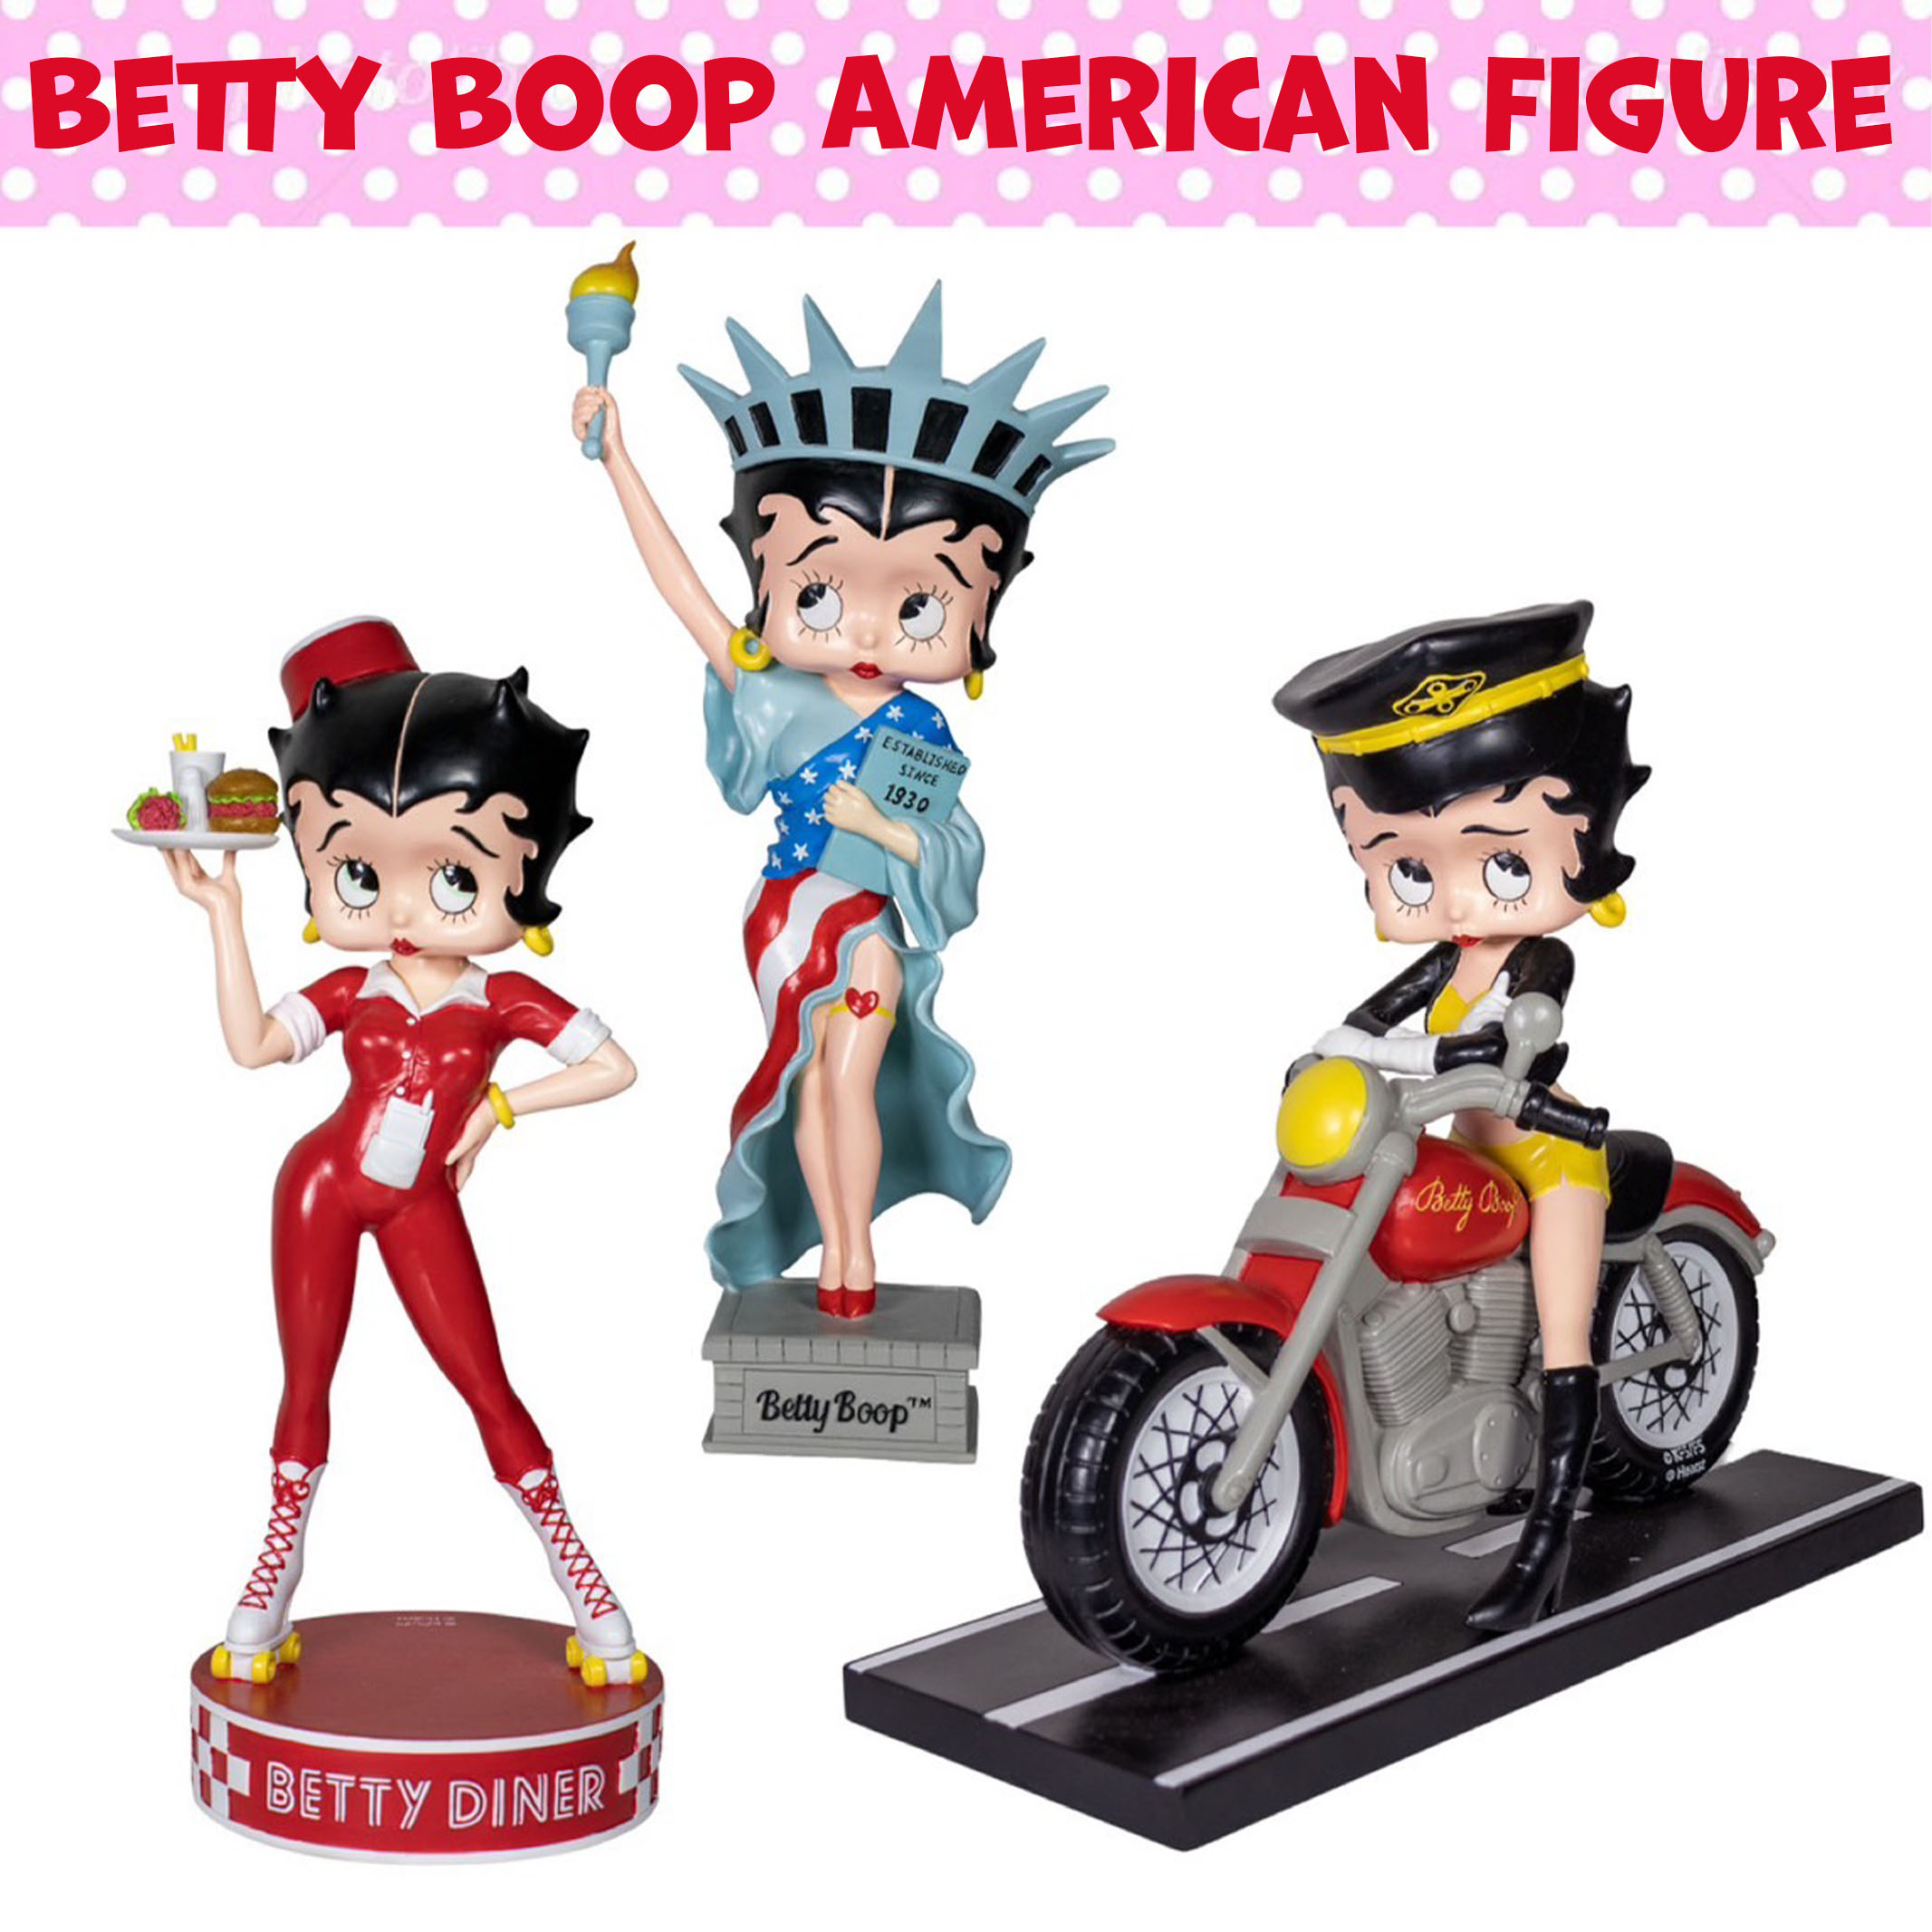 Betty Boop】 American Figure ベティちゃん 自由の女神 ダイナー